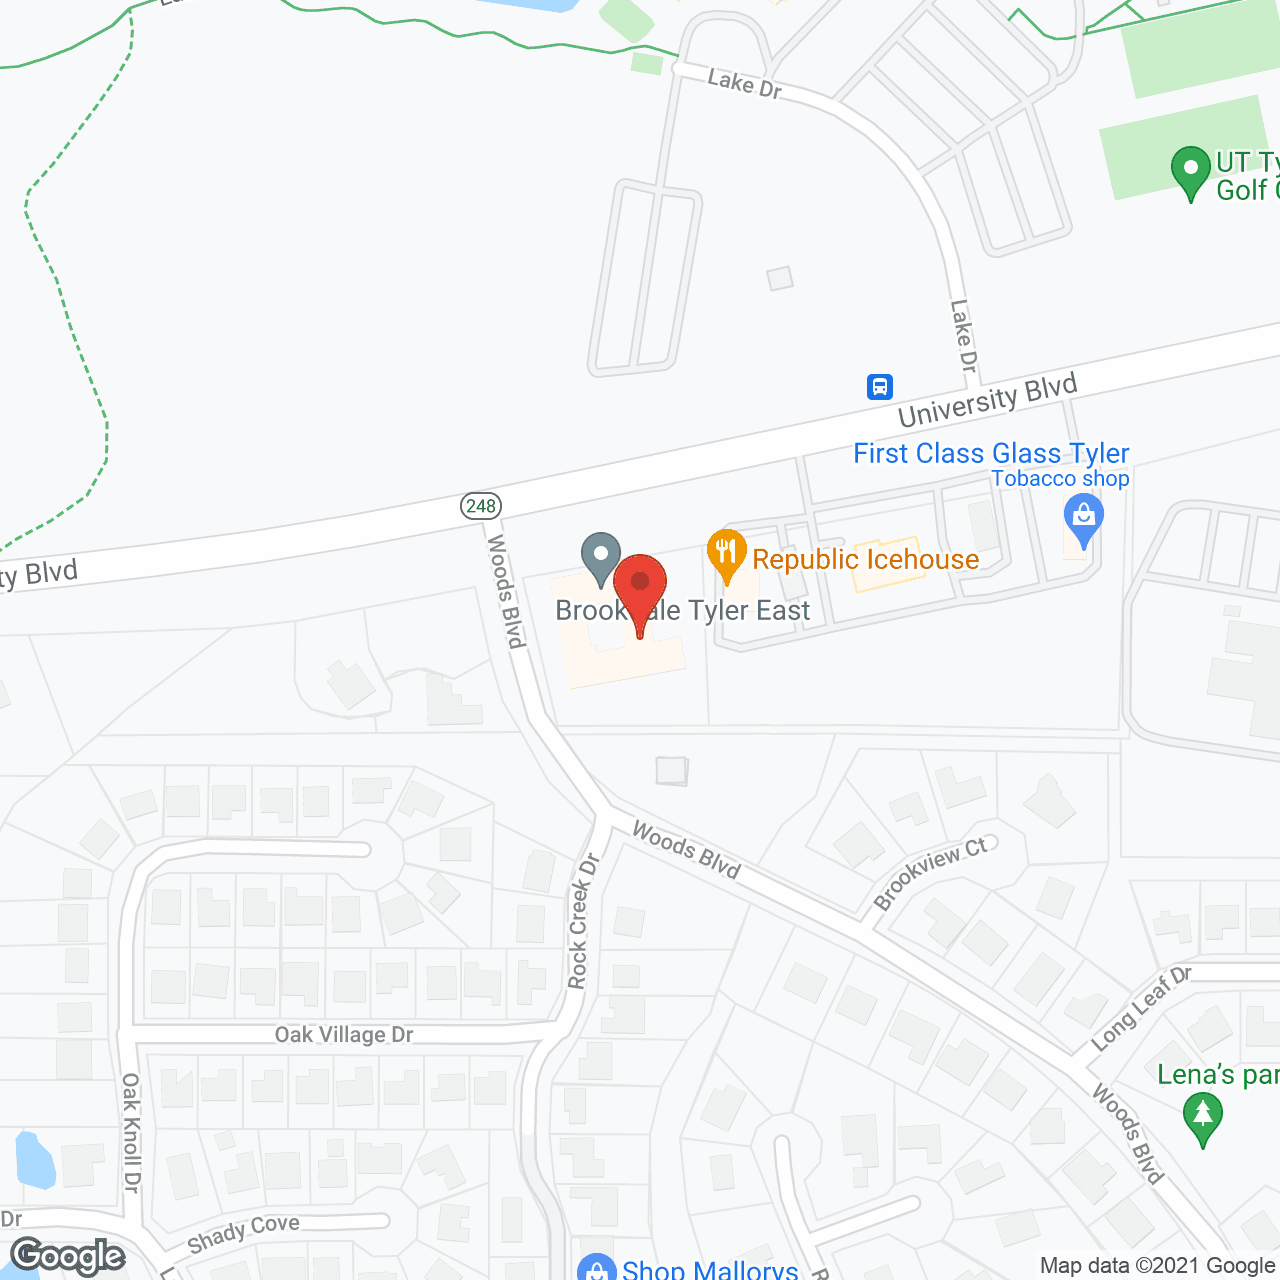 Brookdale Tyler East in google map